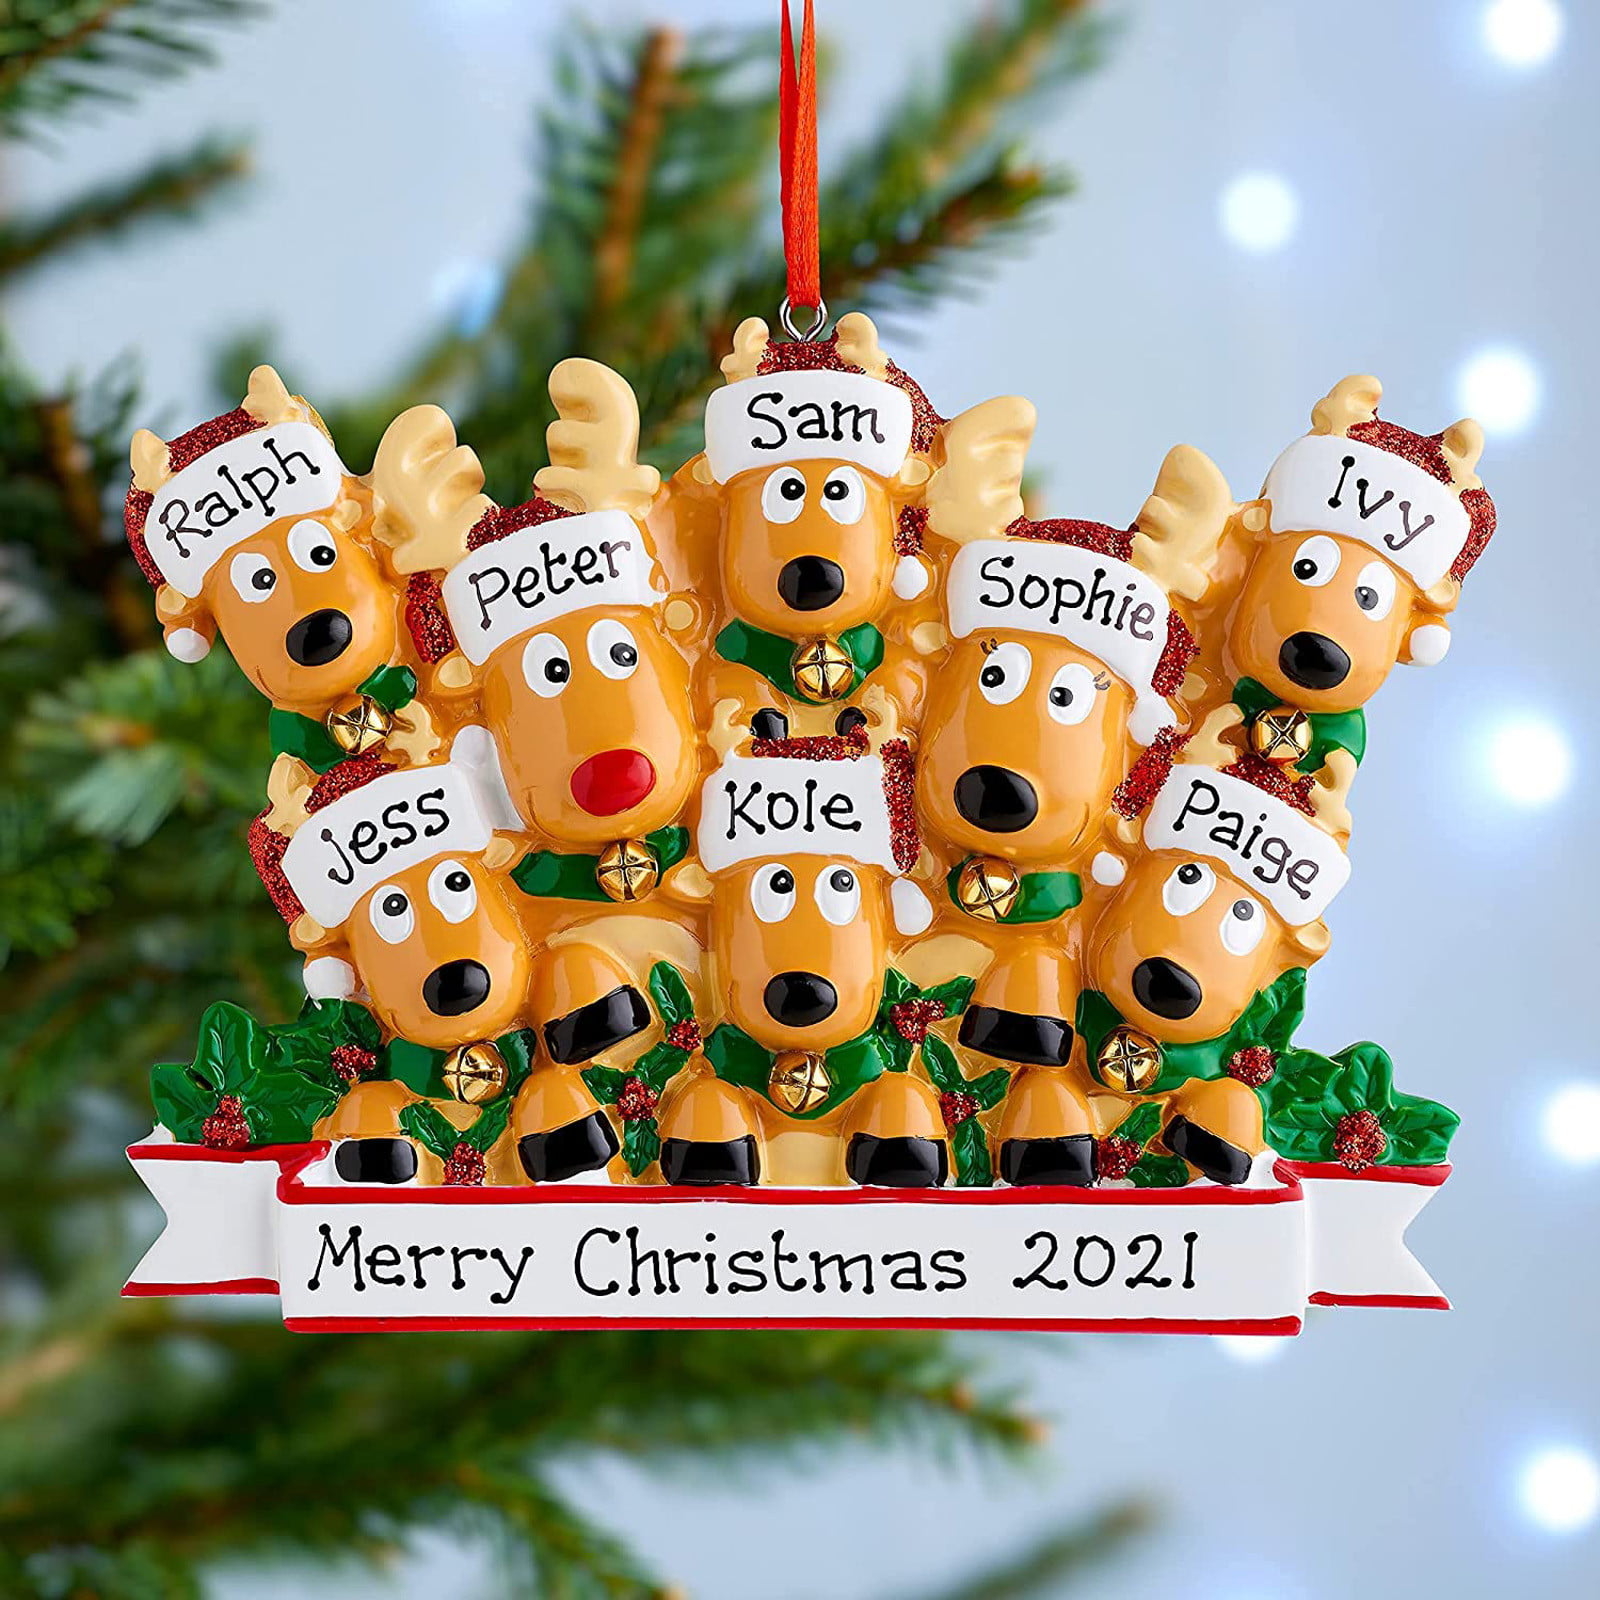 Personalised Photo Bauble Christmas Tree Decoration Image Family Friends Xmas 